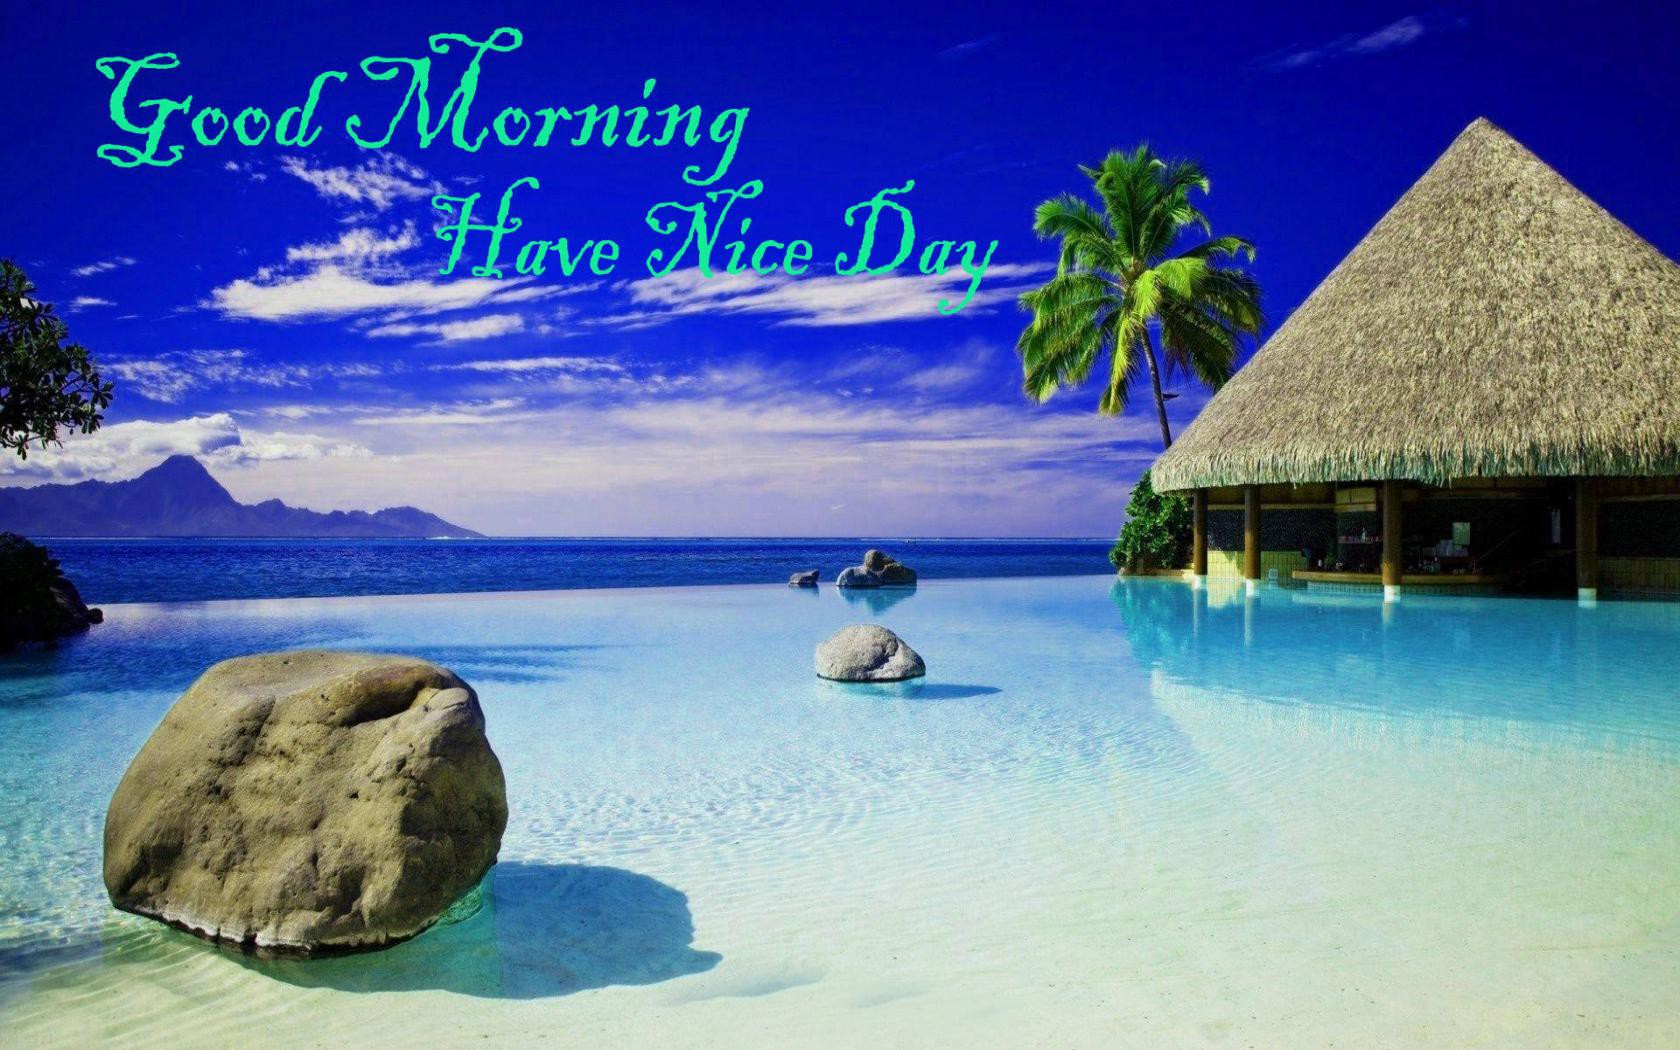 Good Morning Sea Beach - HD Wallpaper 